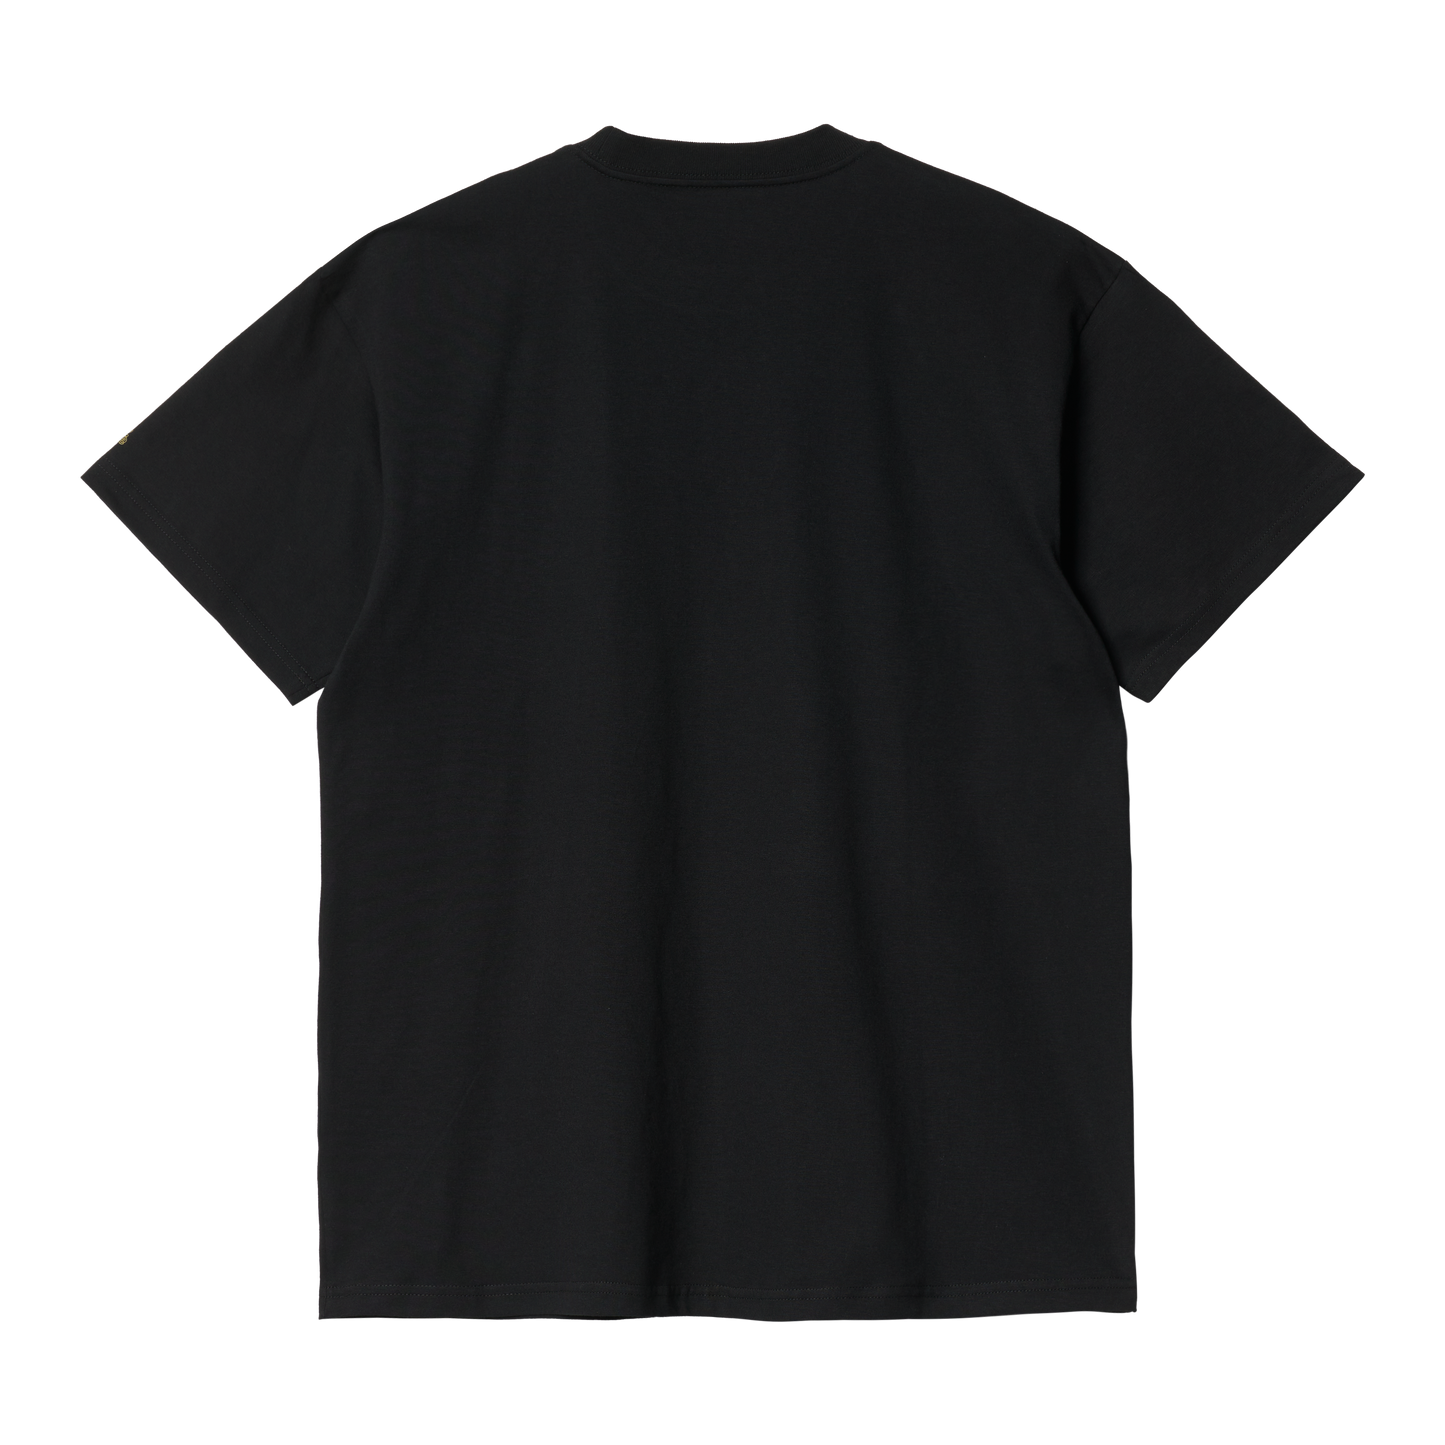 Carhartt WIP Exped T-Shirt